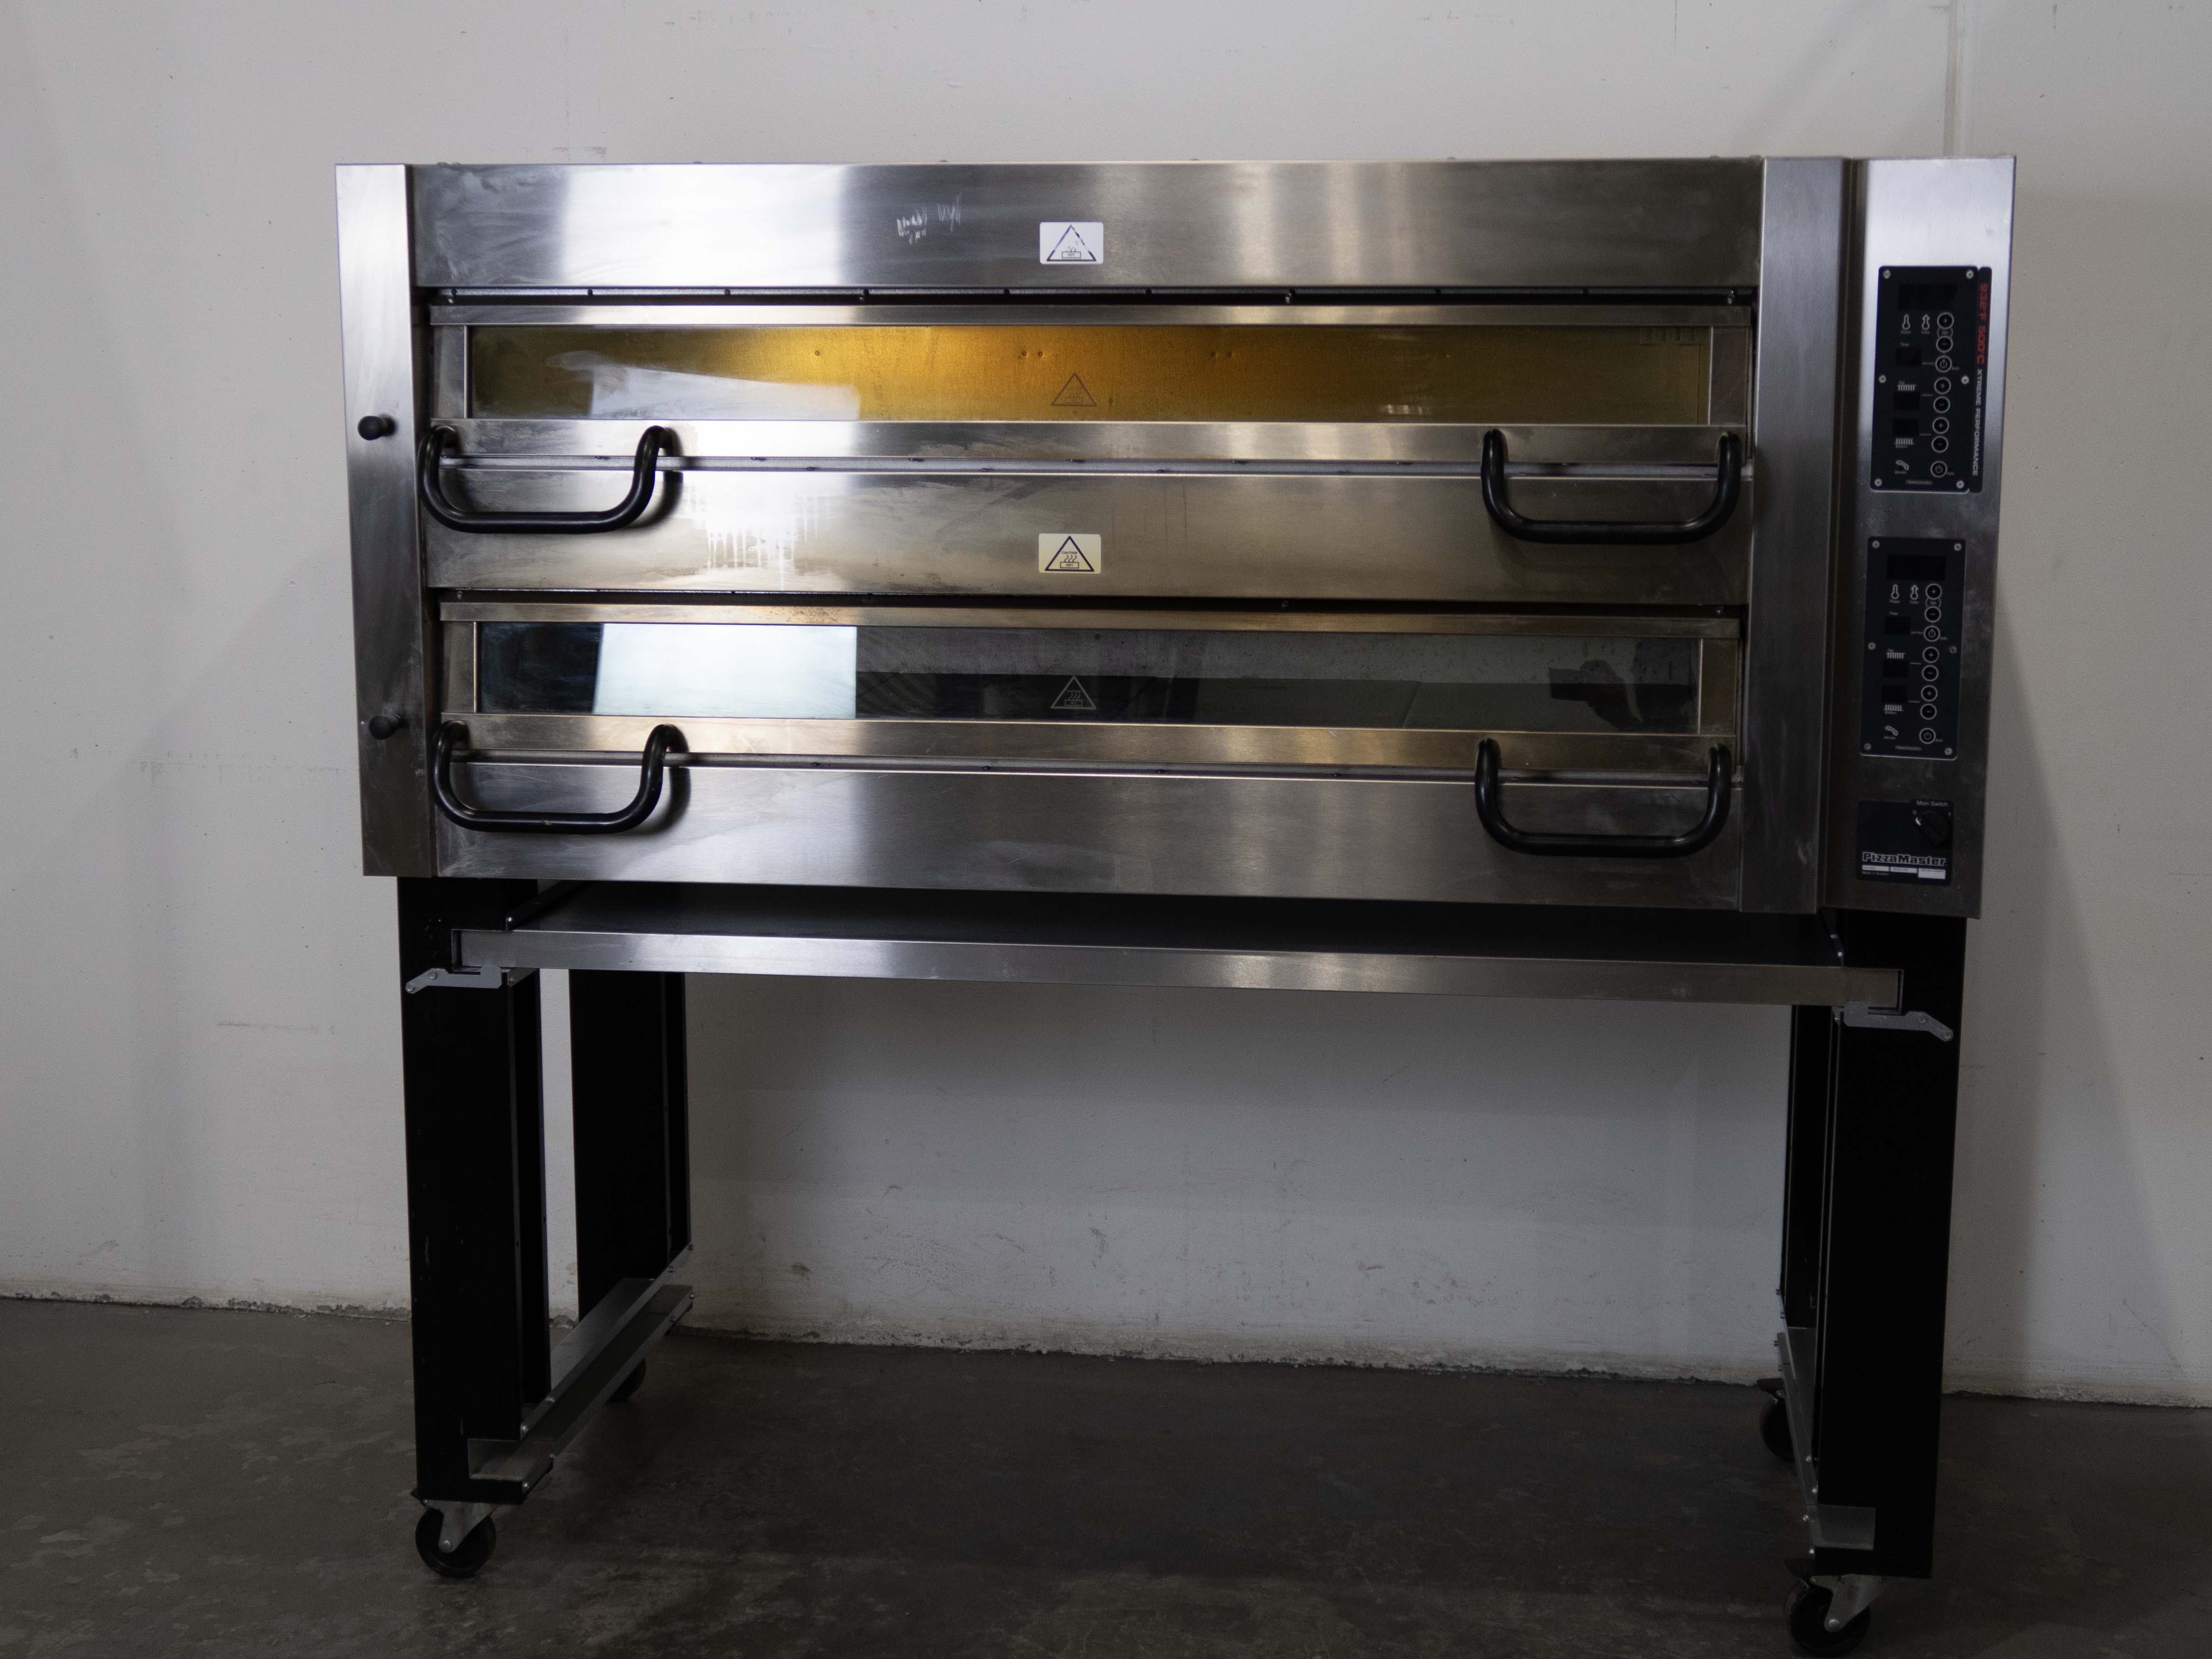 Thumbnail - Bake Partner PM742ED 2 Deck Pizza Oven